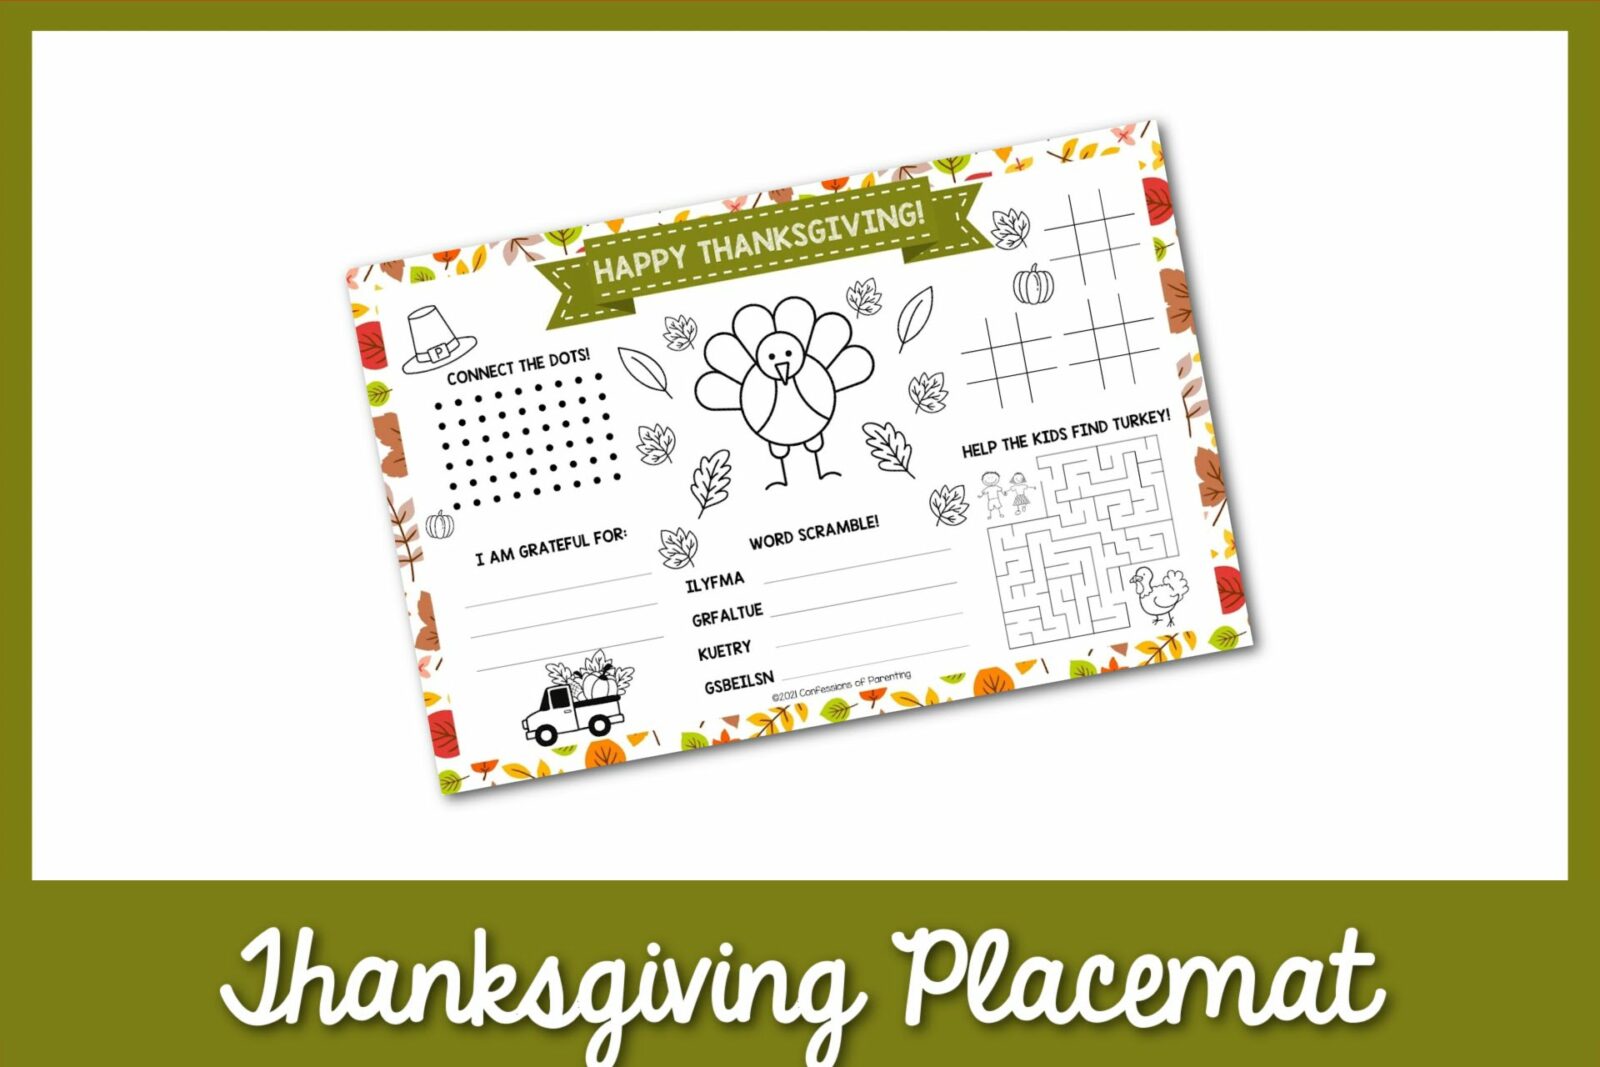 thanksgoiving placemat 1